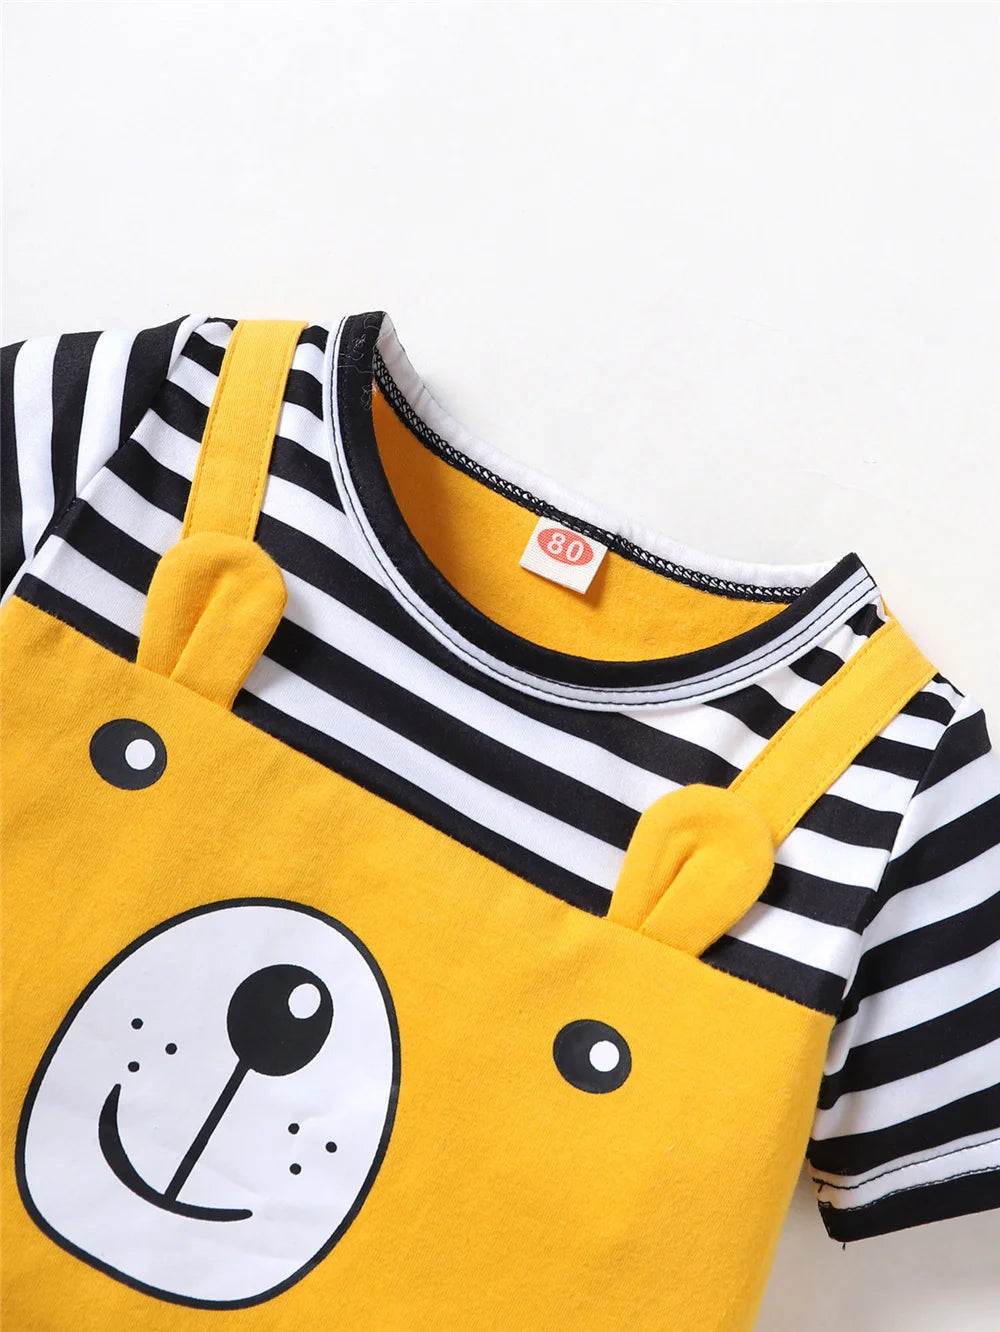 Newborn Baby Boy Bodysuit: Adorable Bear Print & Striped Design